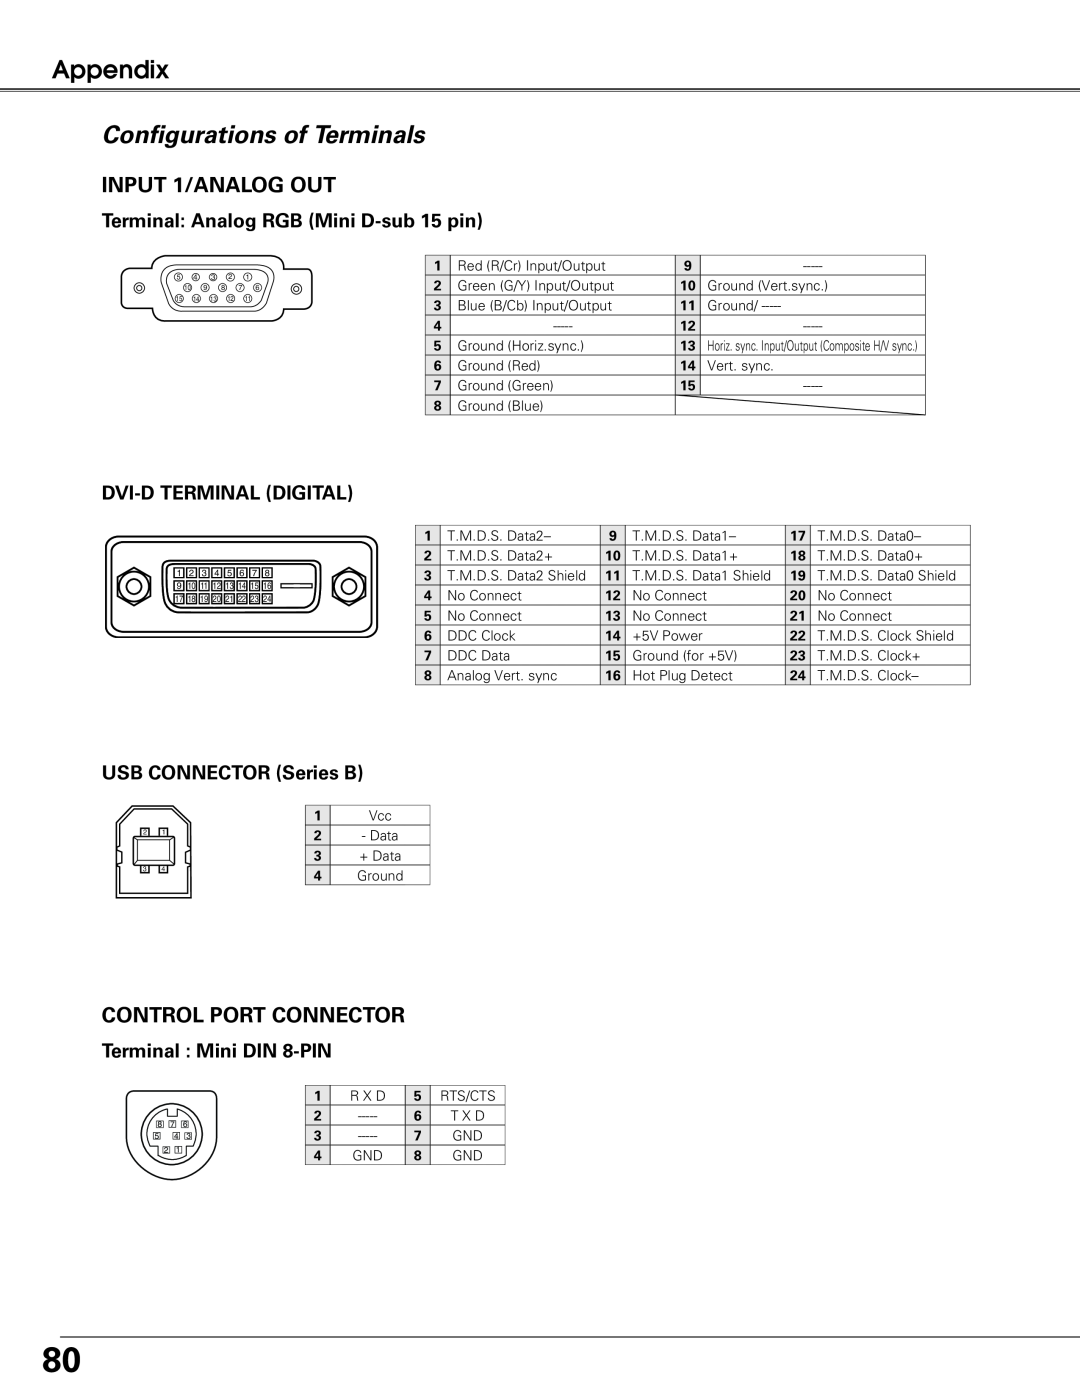 Eiki LC-XG300 Configurations of Terminals, INPUT 1/ANALOG OUT, Control Port Connector, Dvi-Dterminal Digital, Appendix 